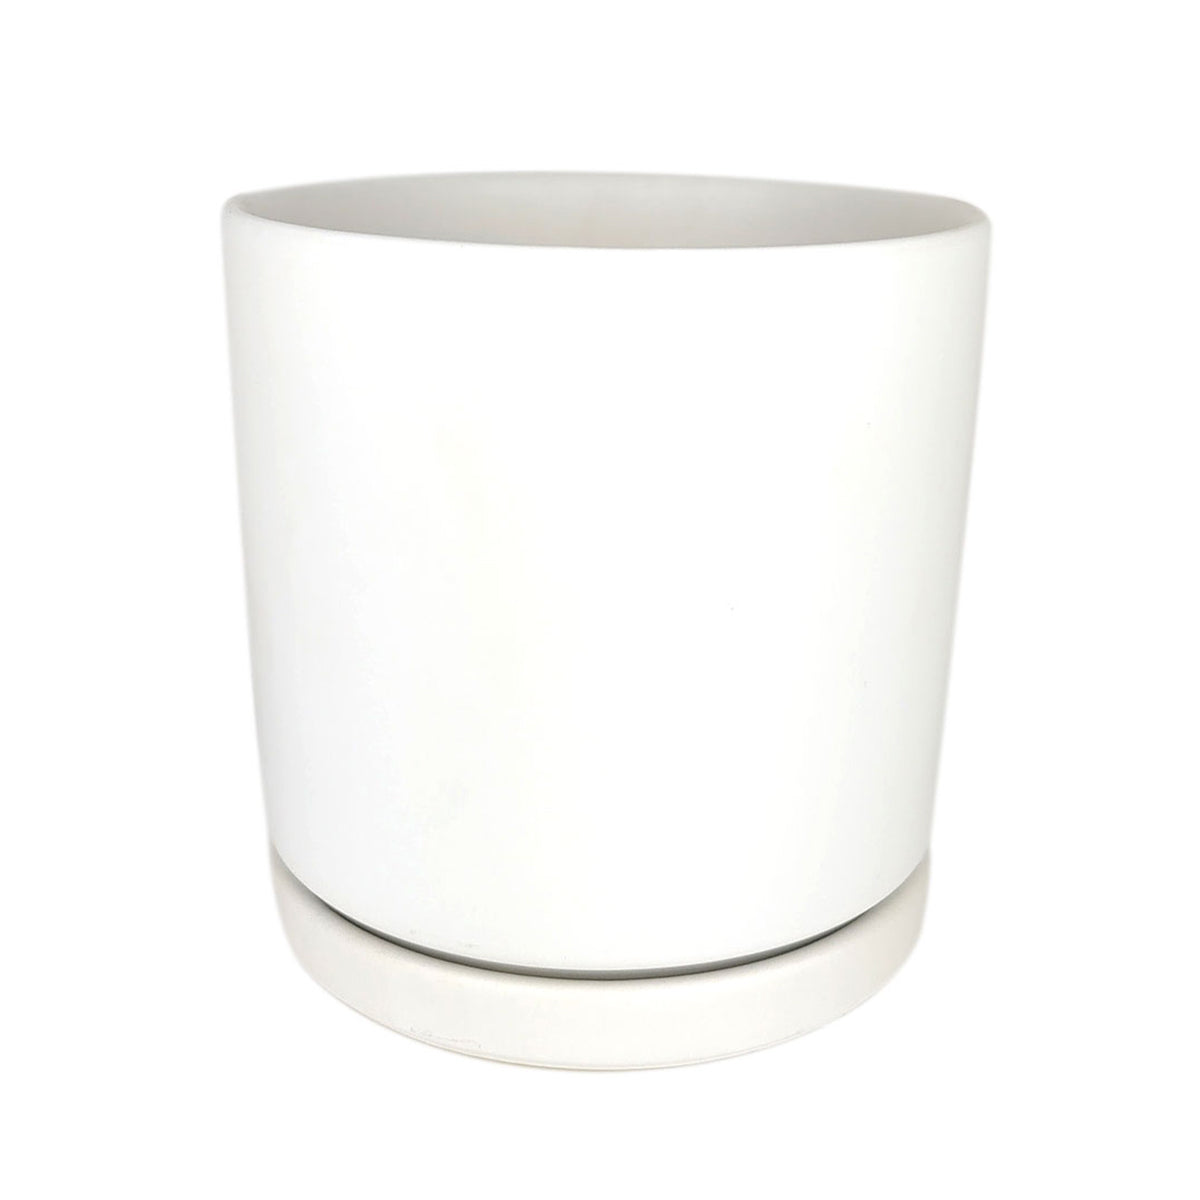 white porcelain pot, modern cylinder pot for medium houseplants, 6 inch pot for houseplants and succulents